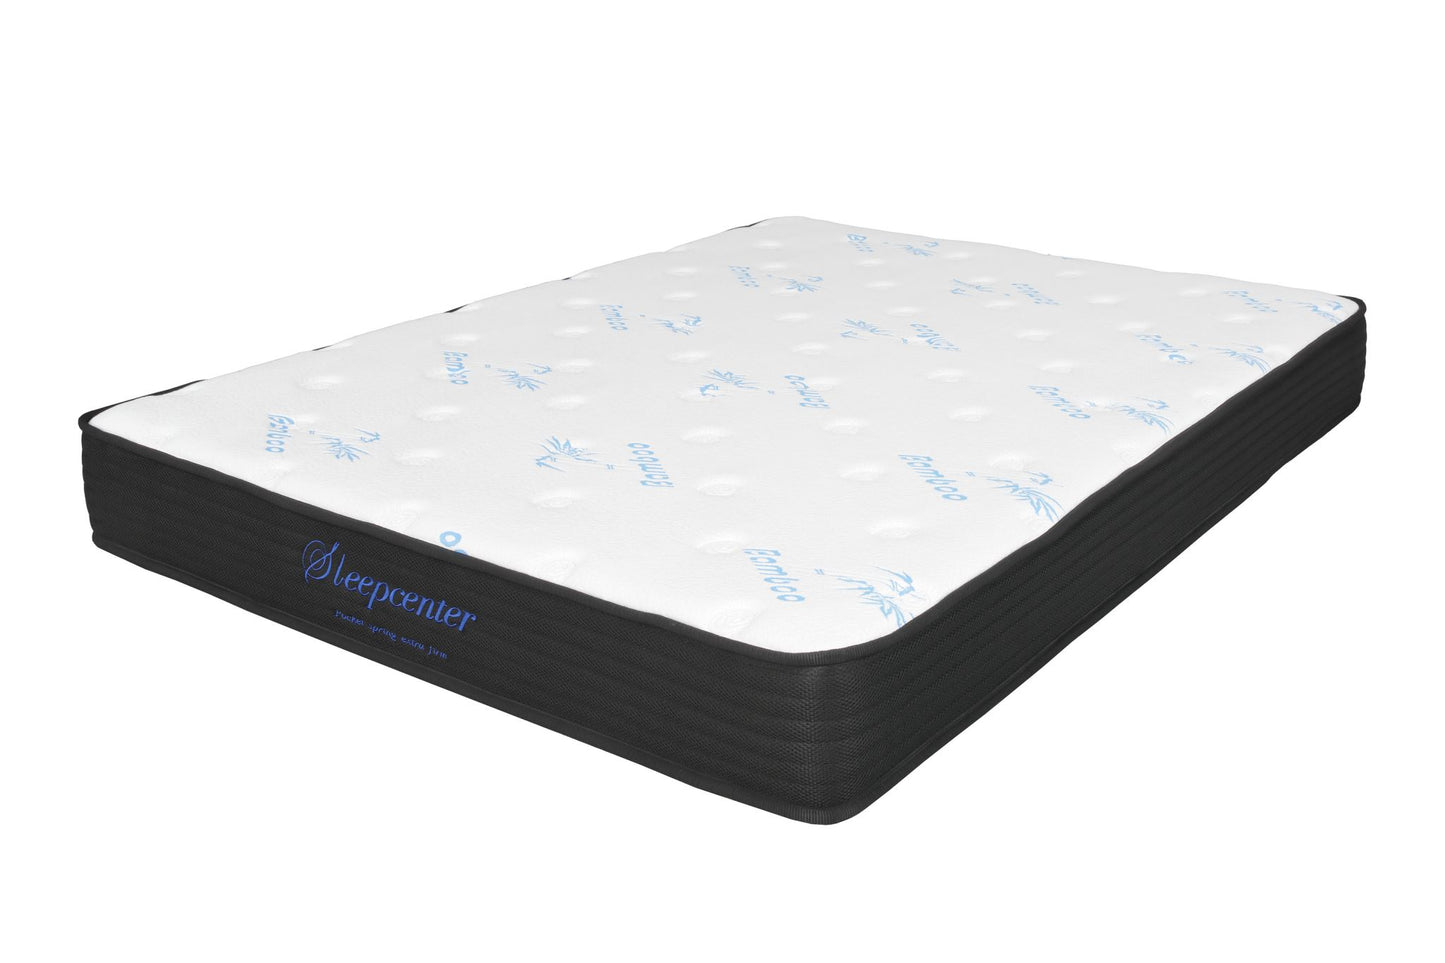 Sleepcenter King Single 5 Zone Pocket Spring Mattress & Bed frame with headboard Combo